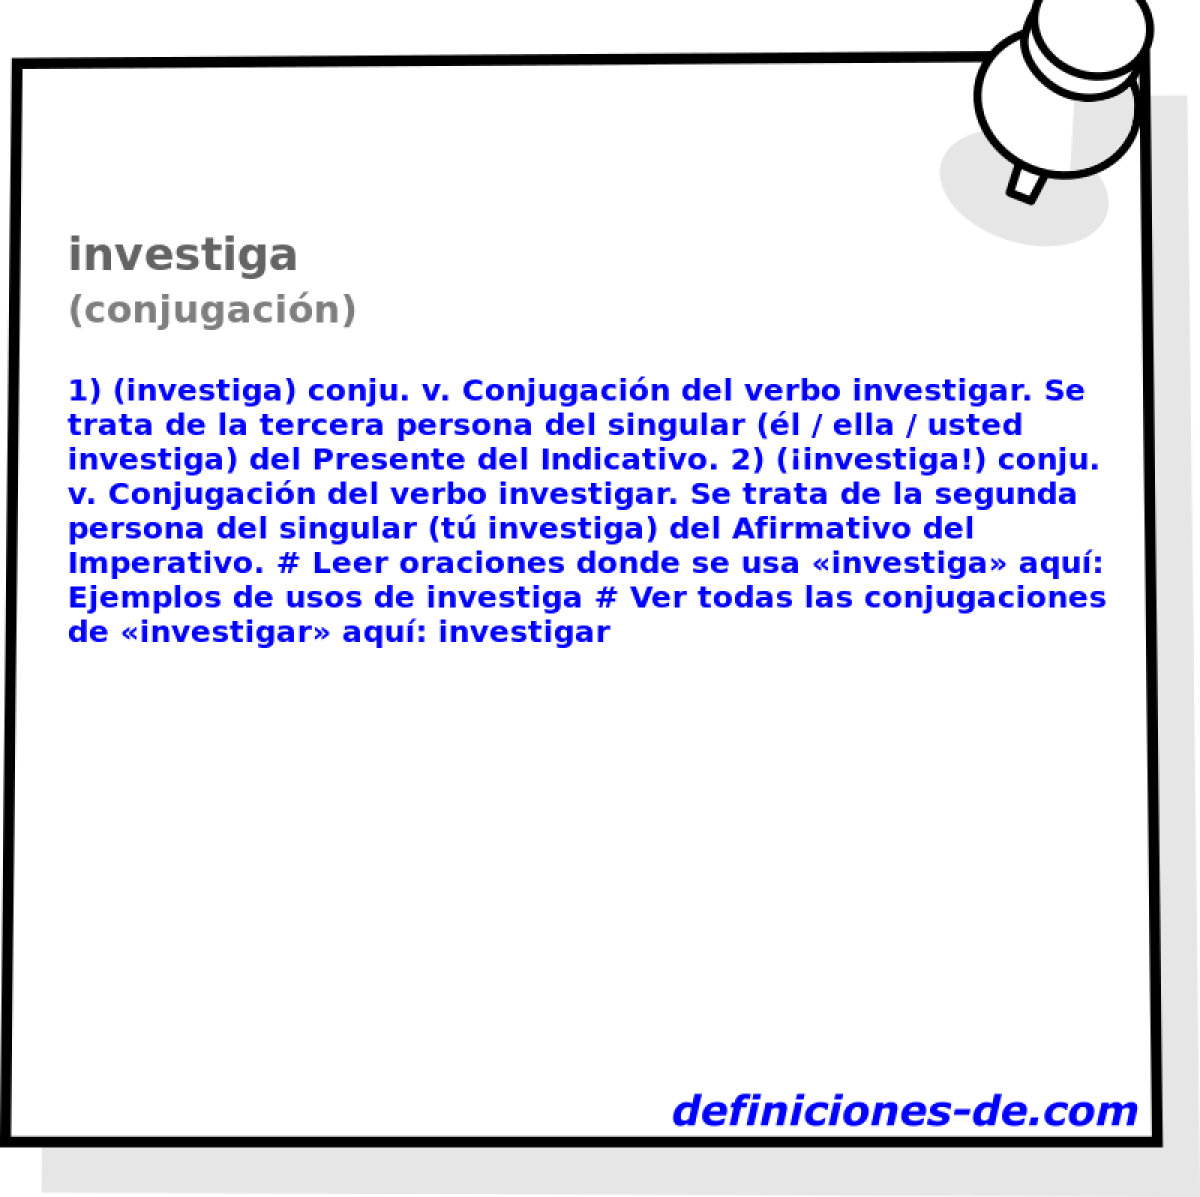 investiga (conjugacin)